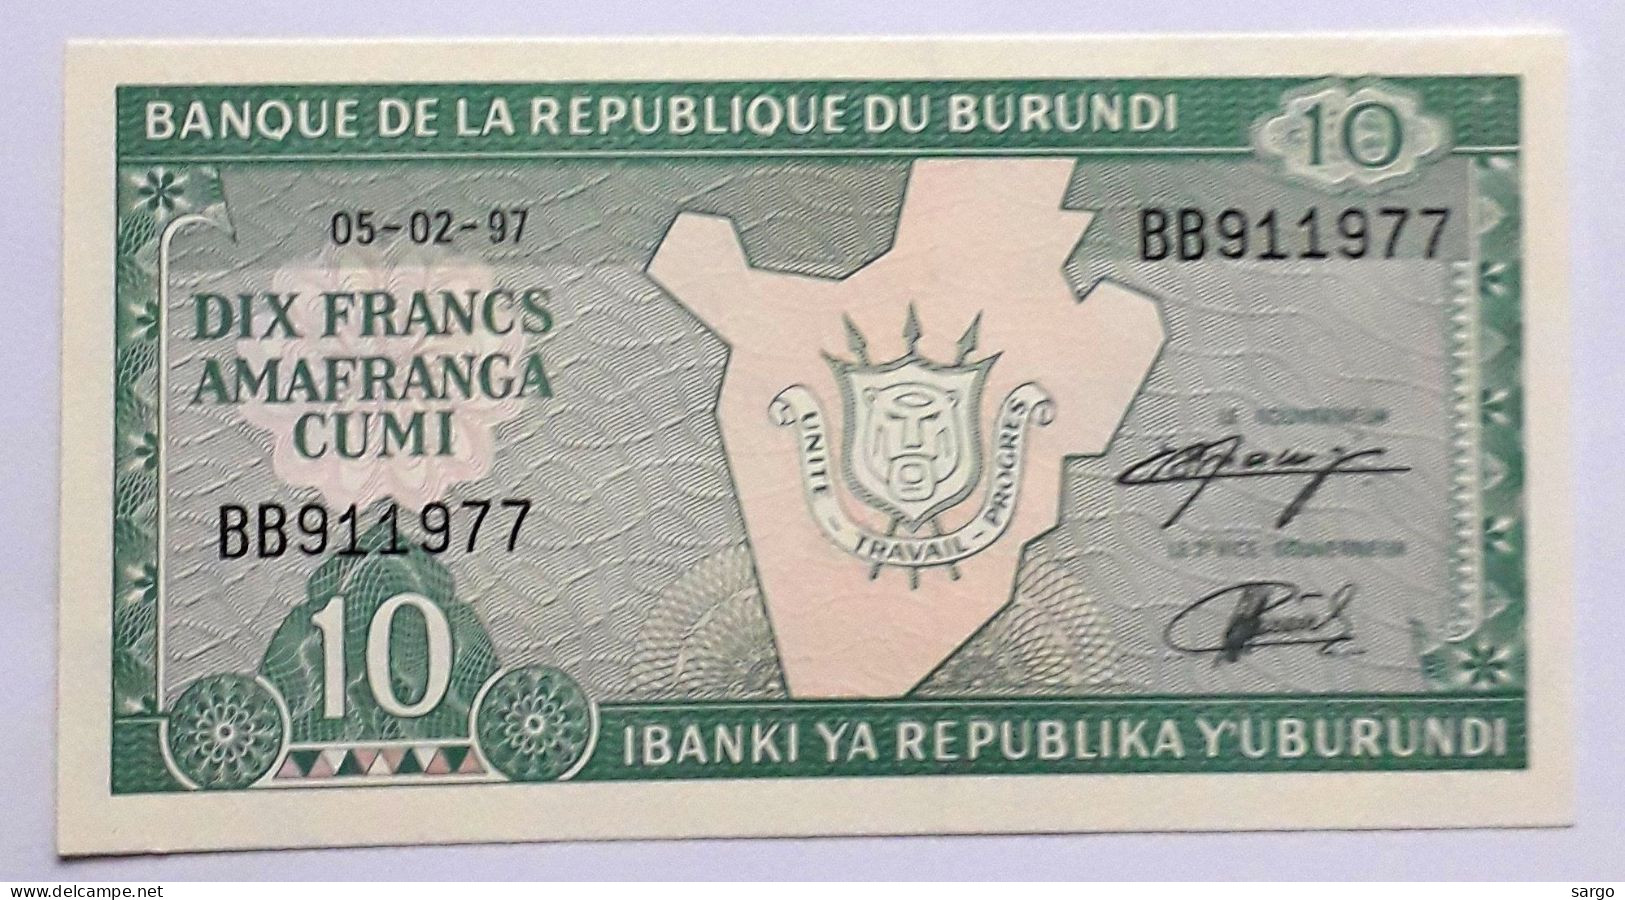 BURUNDI - 10 FRANCS - P 33 -  (1997) - UNC - -BANKNOTES - PAPER MONEY - CARTAMONETA - - Burundi